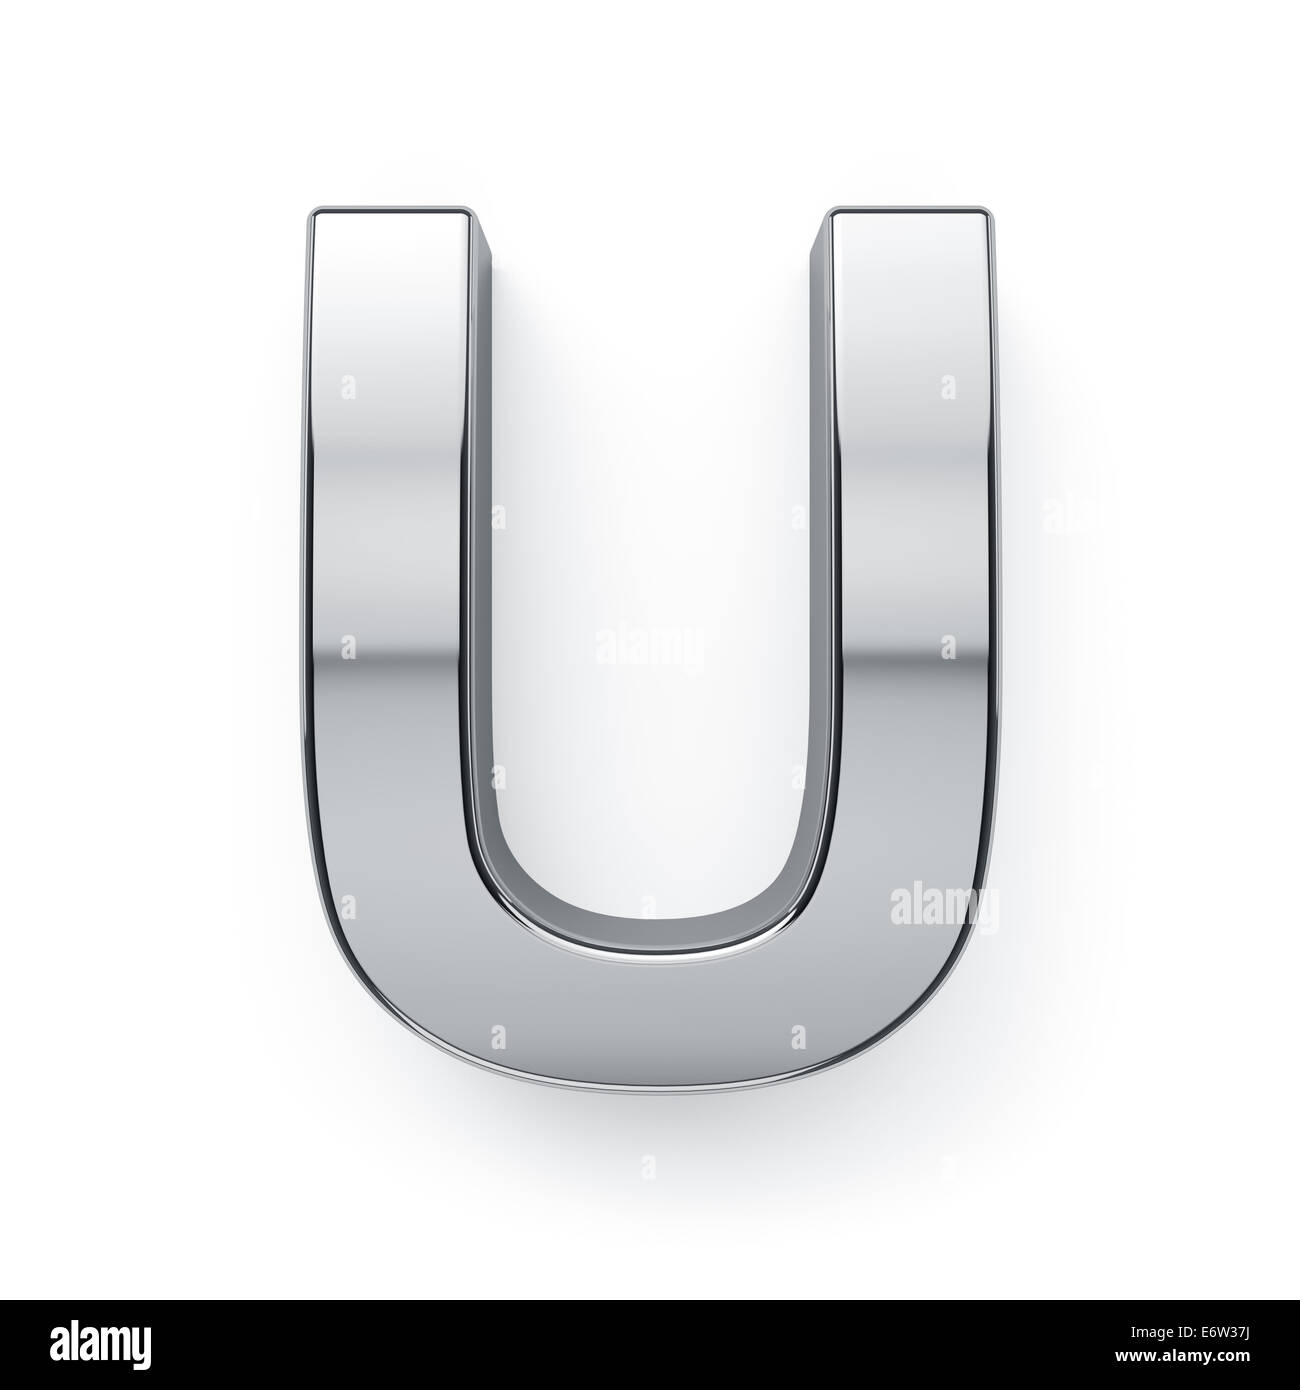 3d render of metalic alphabet letter simbol - U. Isolated on white background Stock Photo